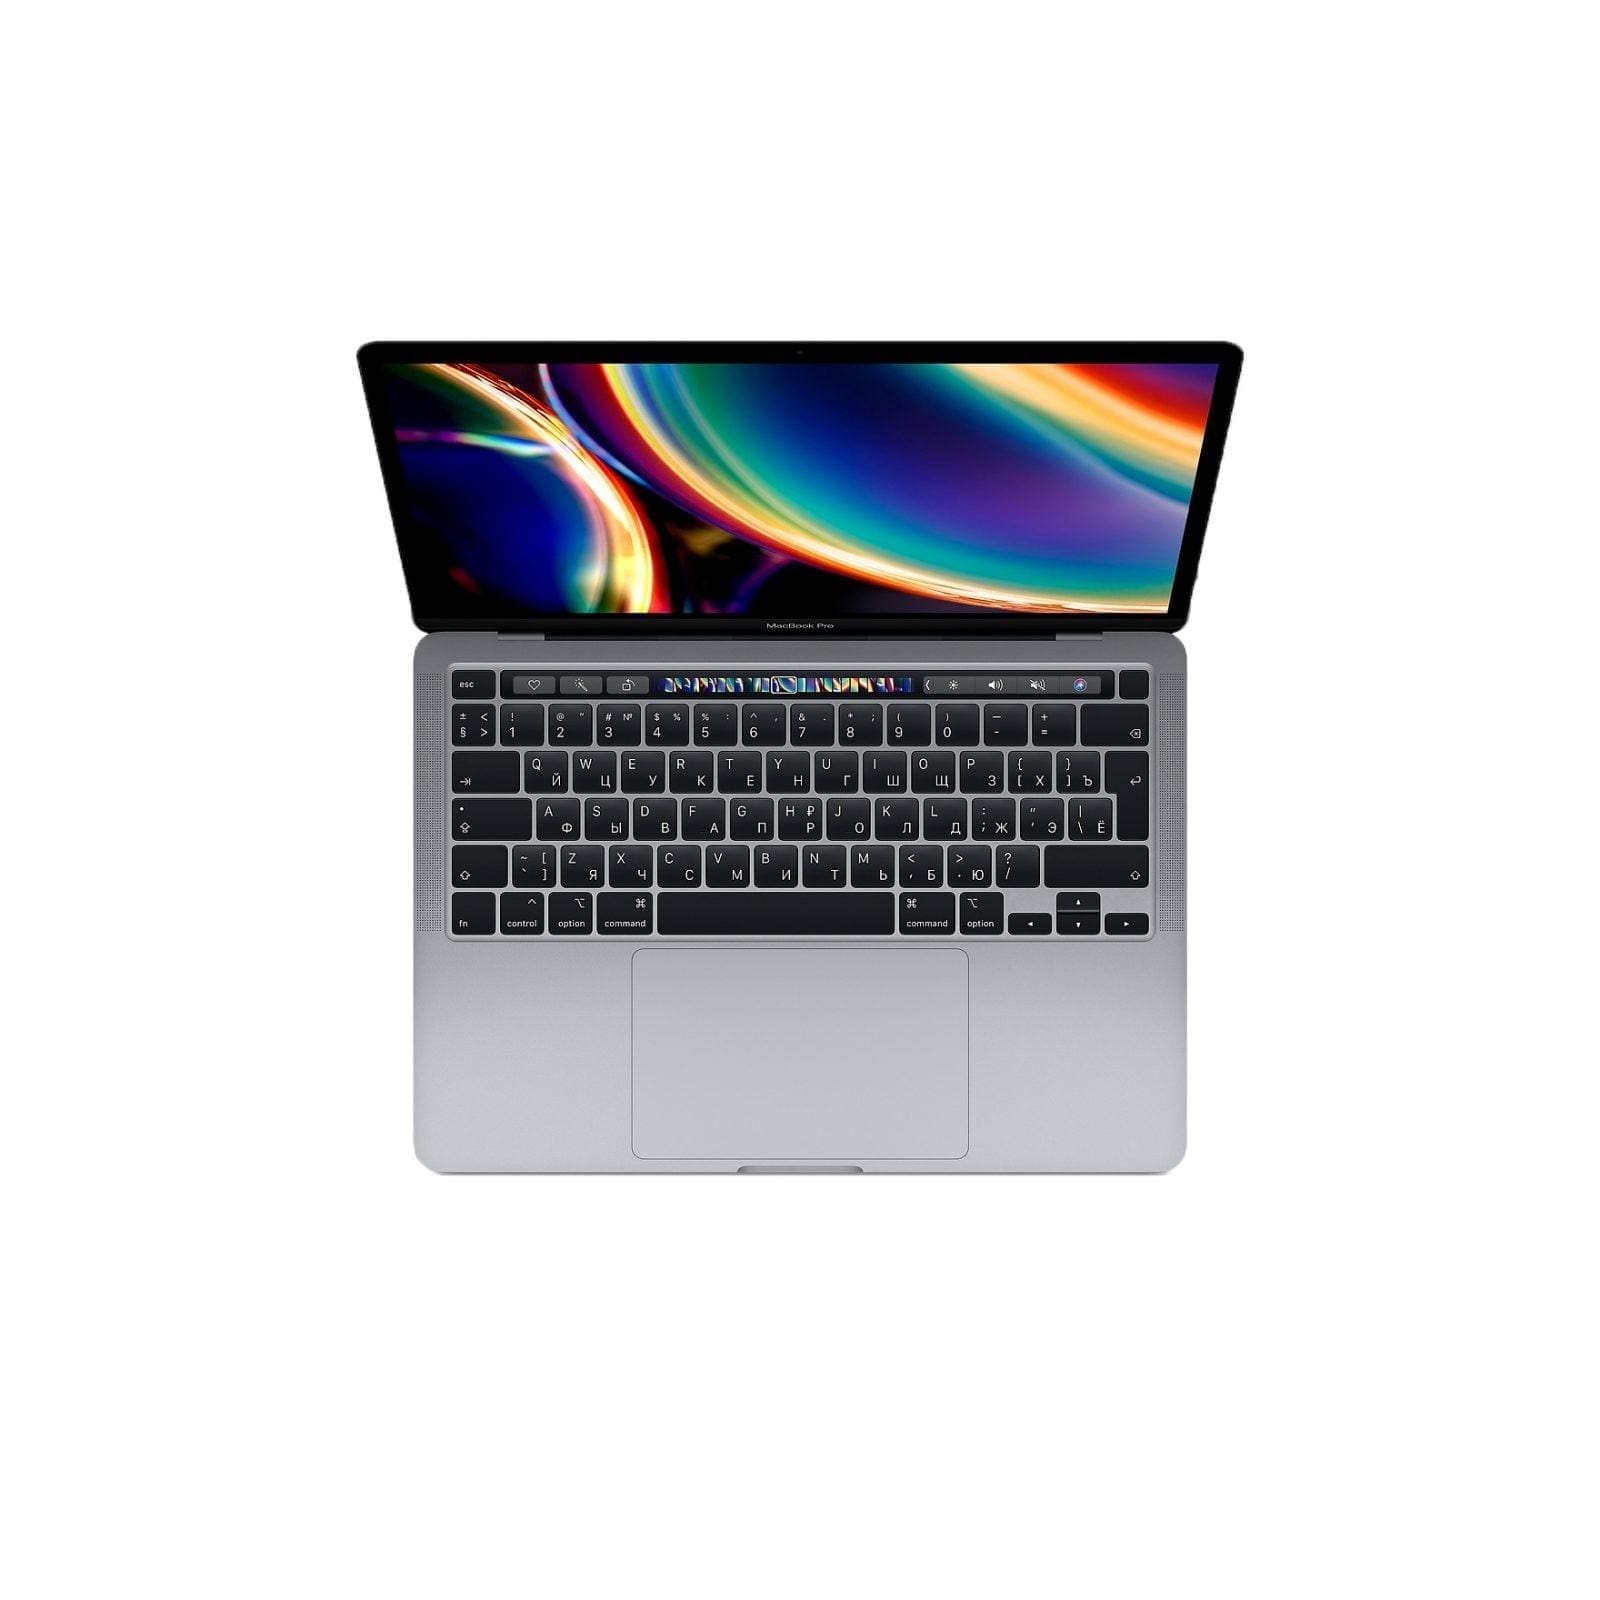 Macbook pro retina in apple stores 7 beta